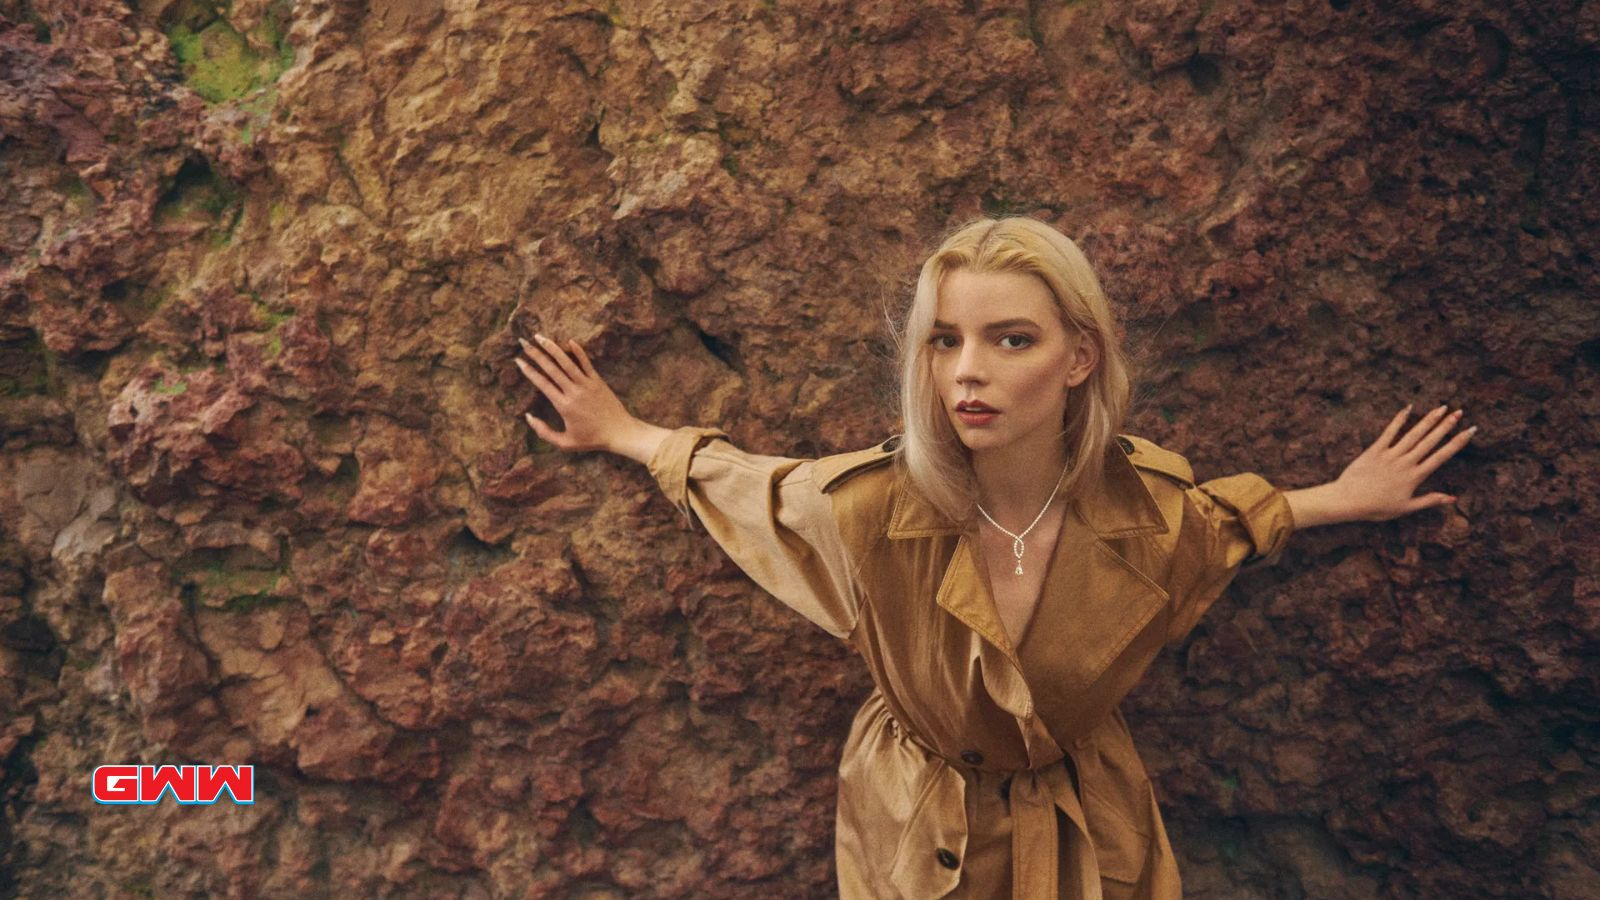 Anya Taylor-Joy posing against a rocky backdrop